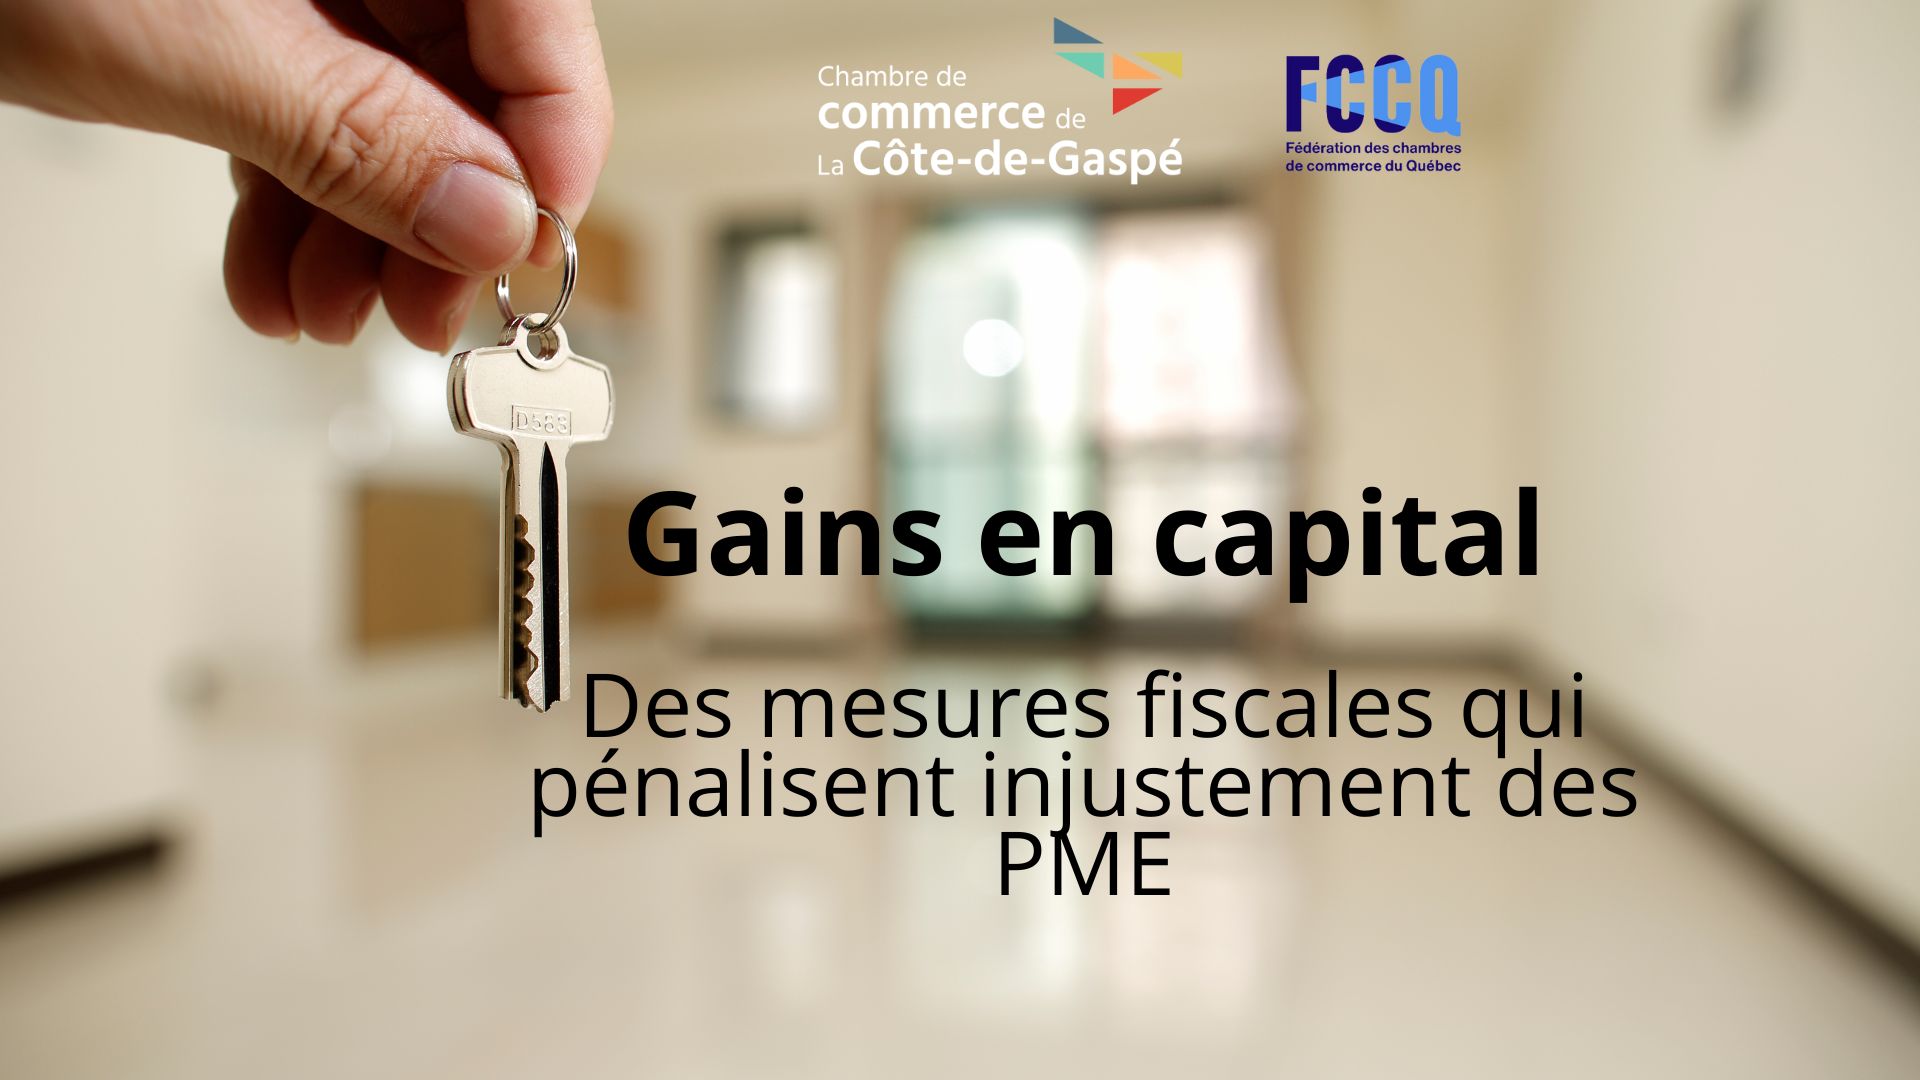 GAINS EN CAPITAL :  Des mesures fiscales qui pénalisent injustement des PME, rappellent la FCCQ et la CCCG